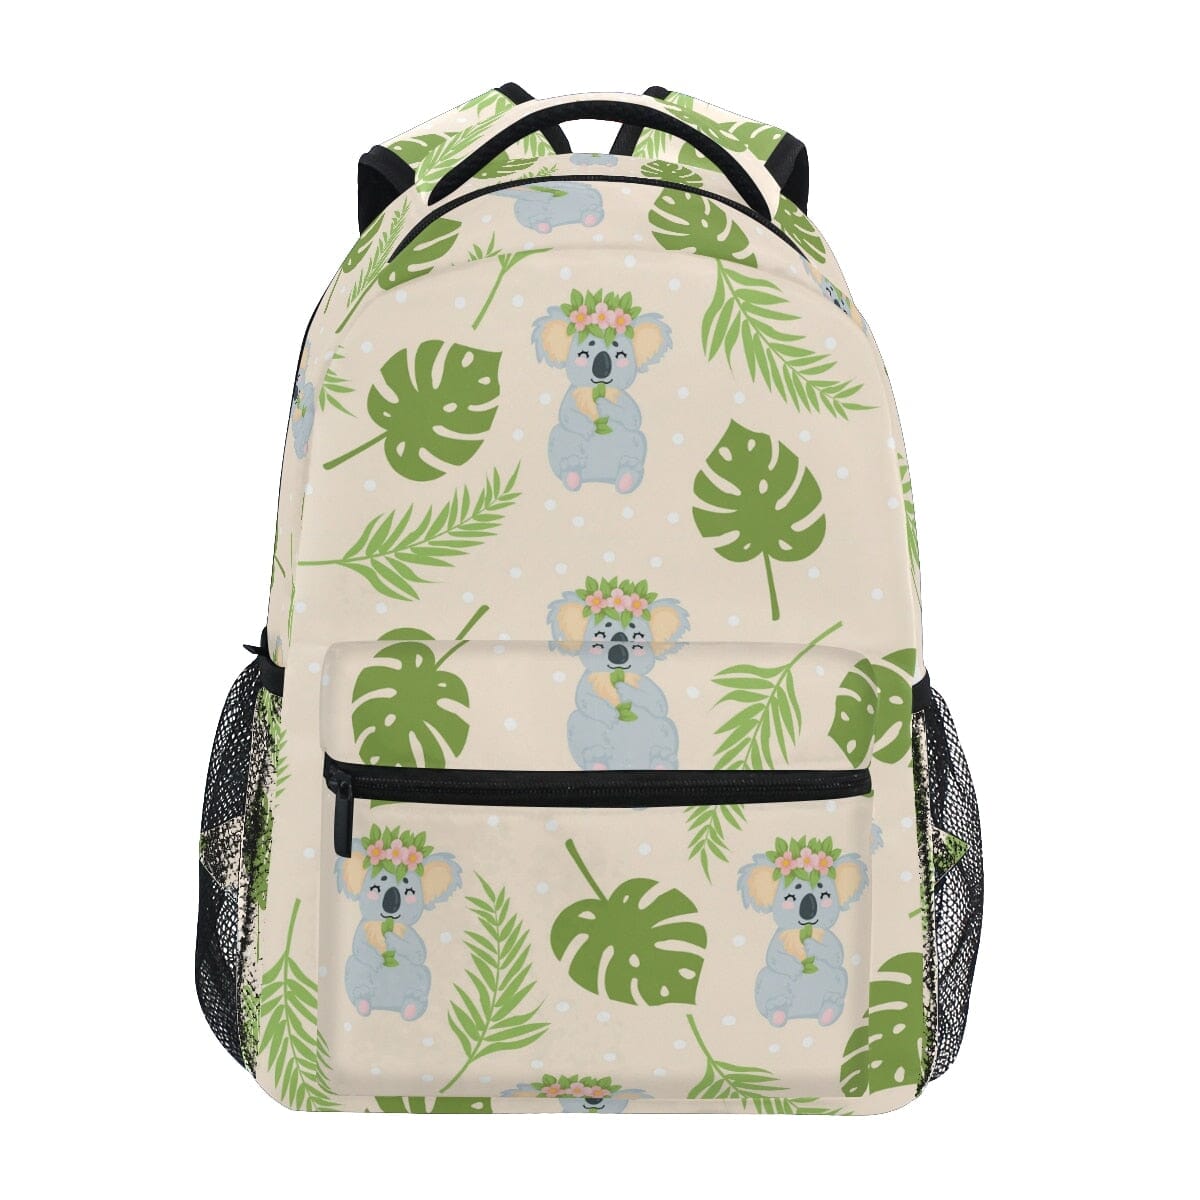 Koala Backpack The Store Bags 04 